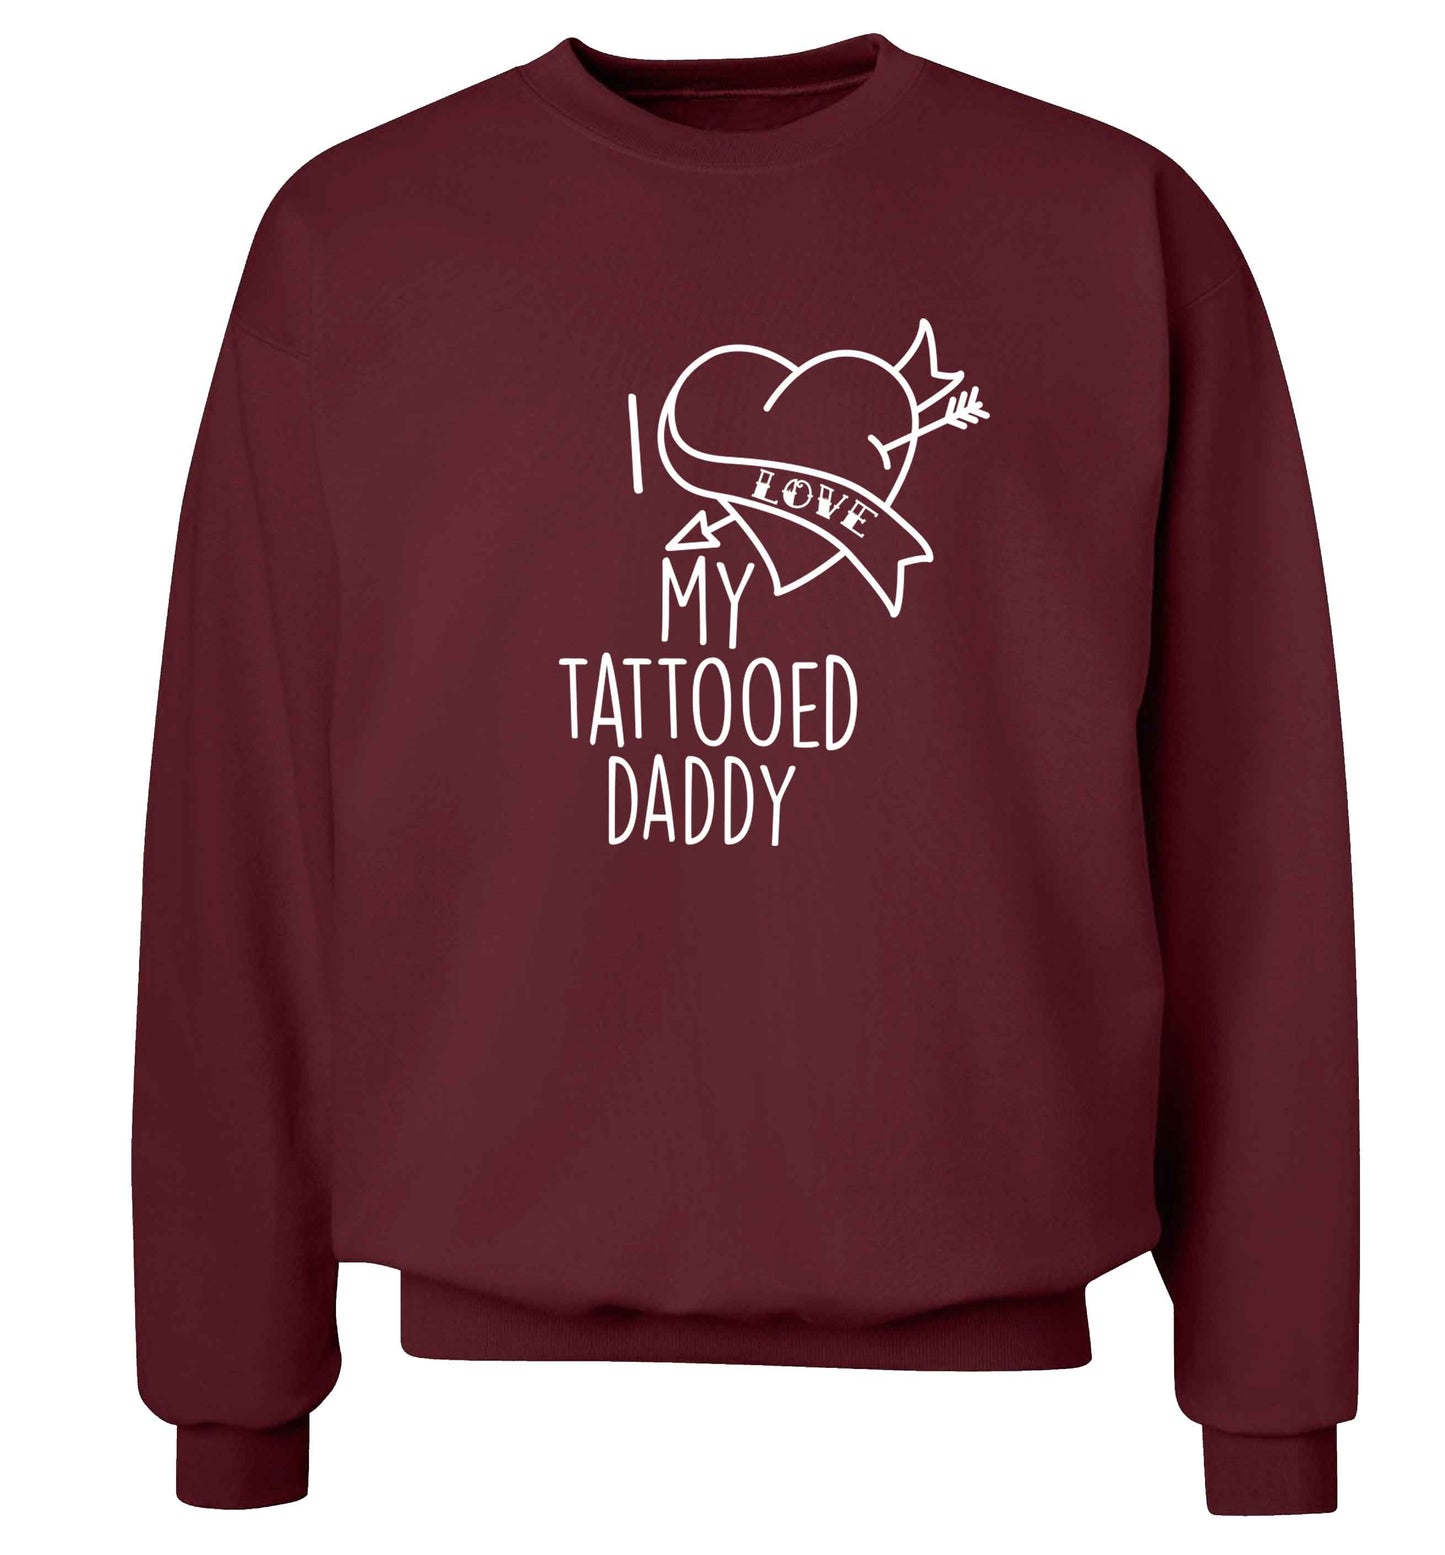 I love my tattooed daddy adult's unisex maroon sweater 2XL